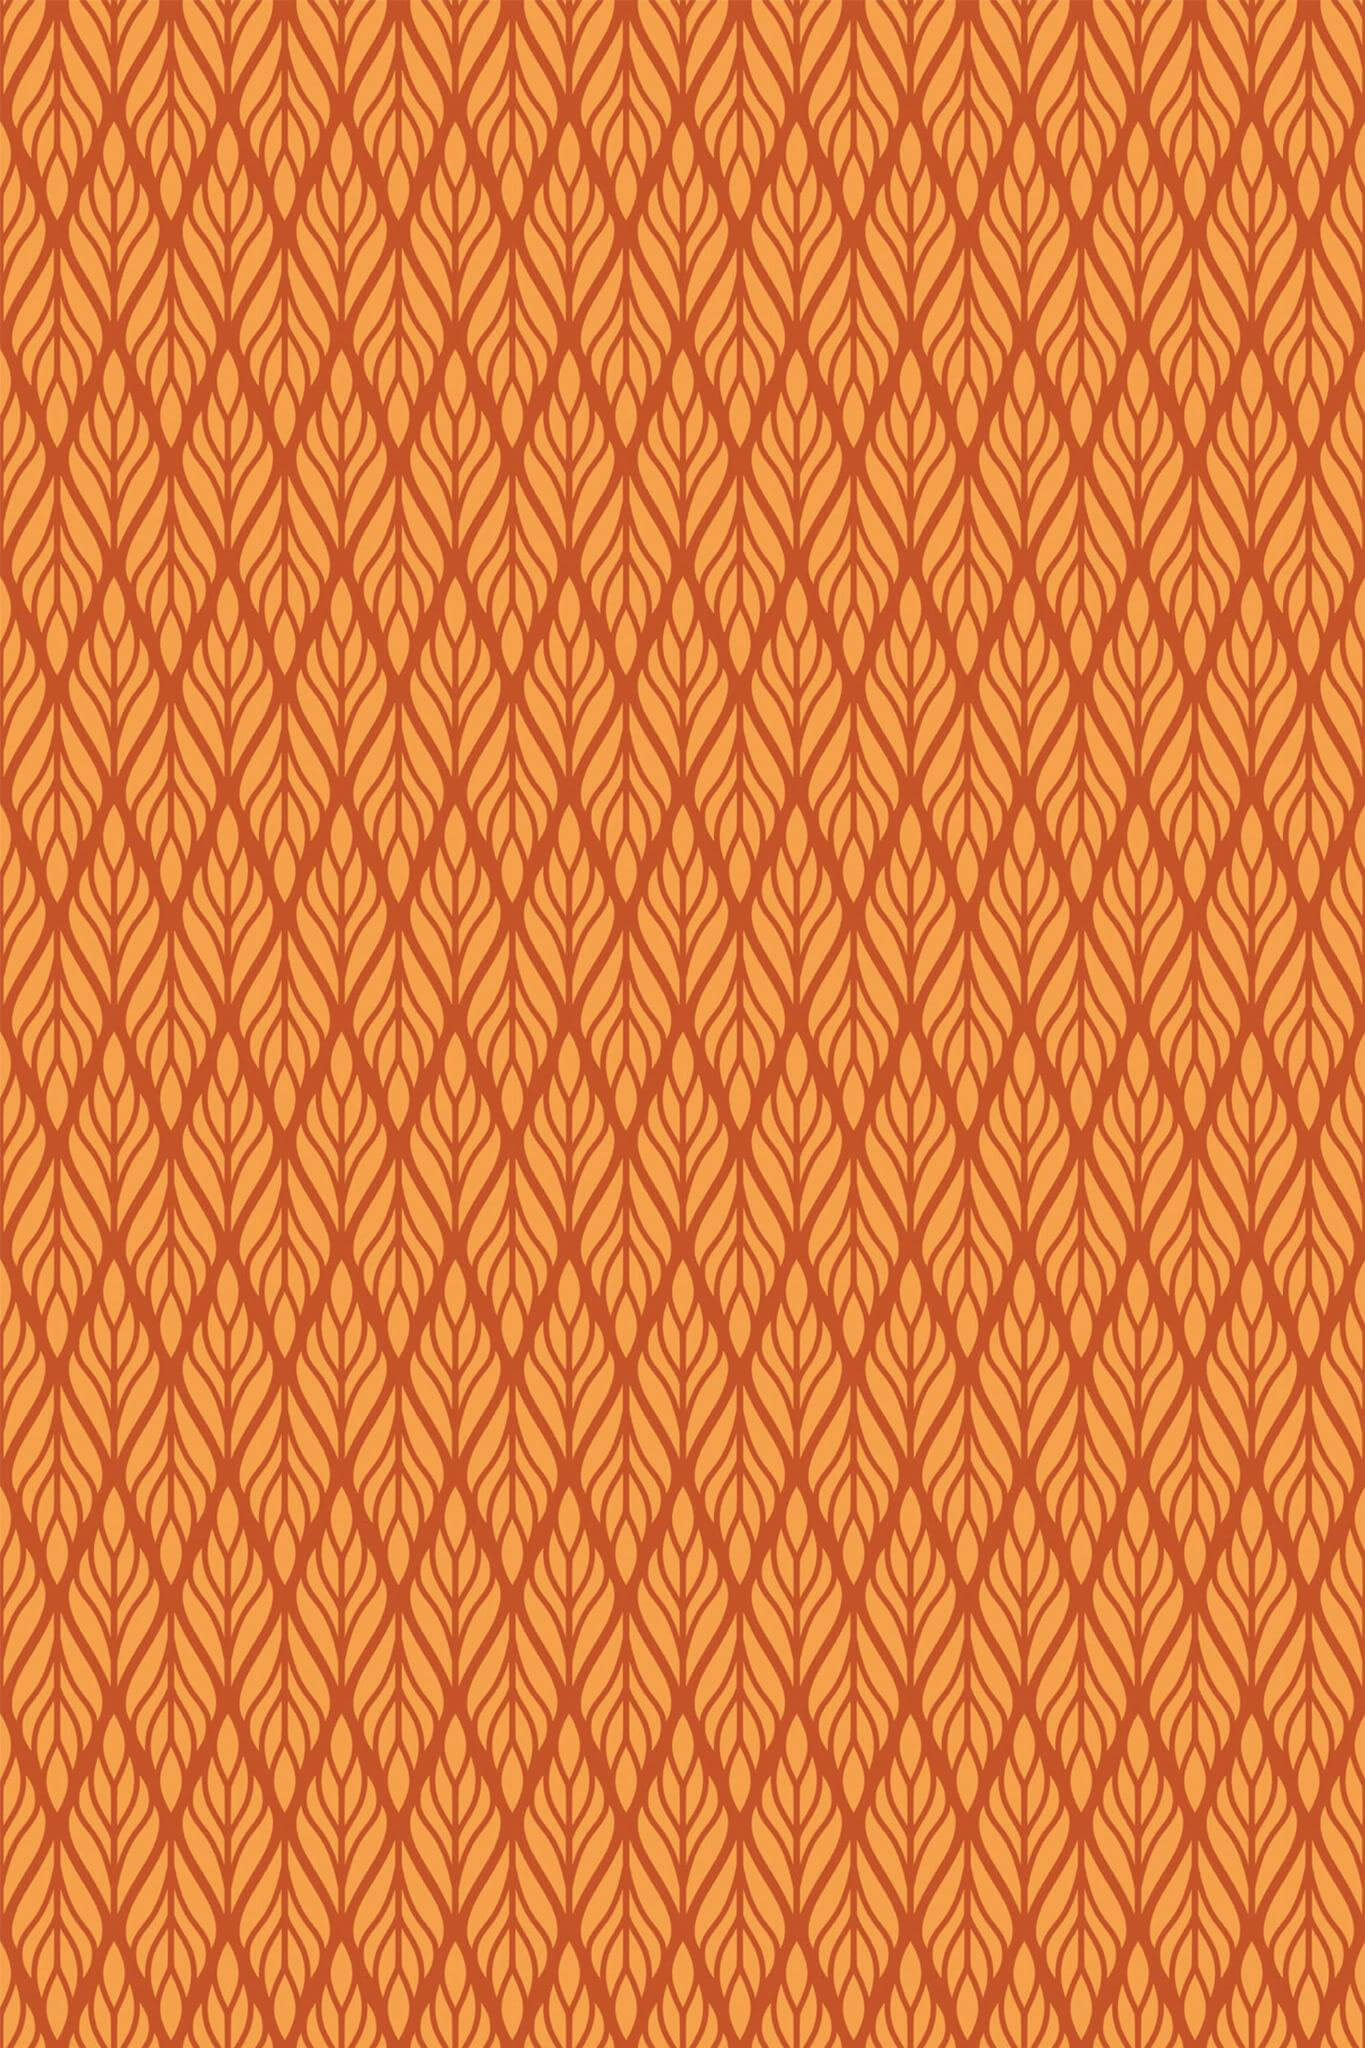 https://fancywalls.eu/wp-content/uploads/terracotta-deco-delight-pattern-repeat-removable-wallpaper-design.jpg